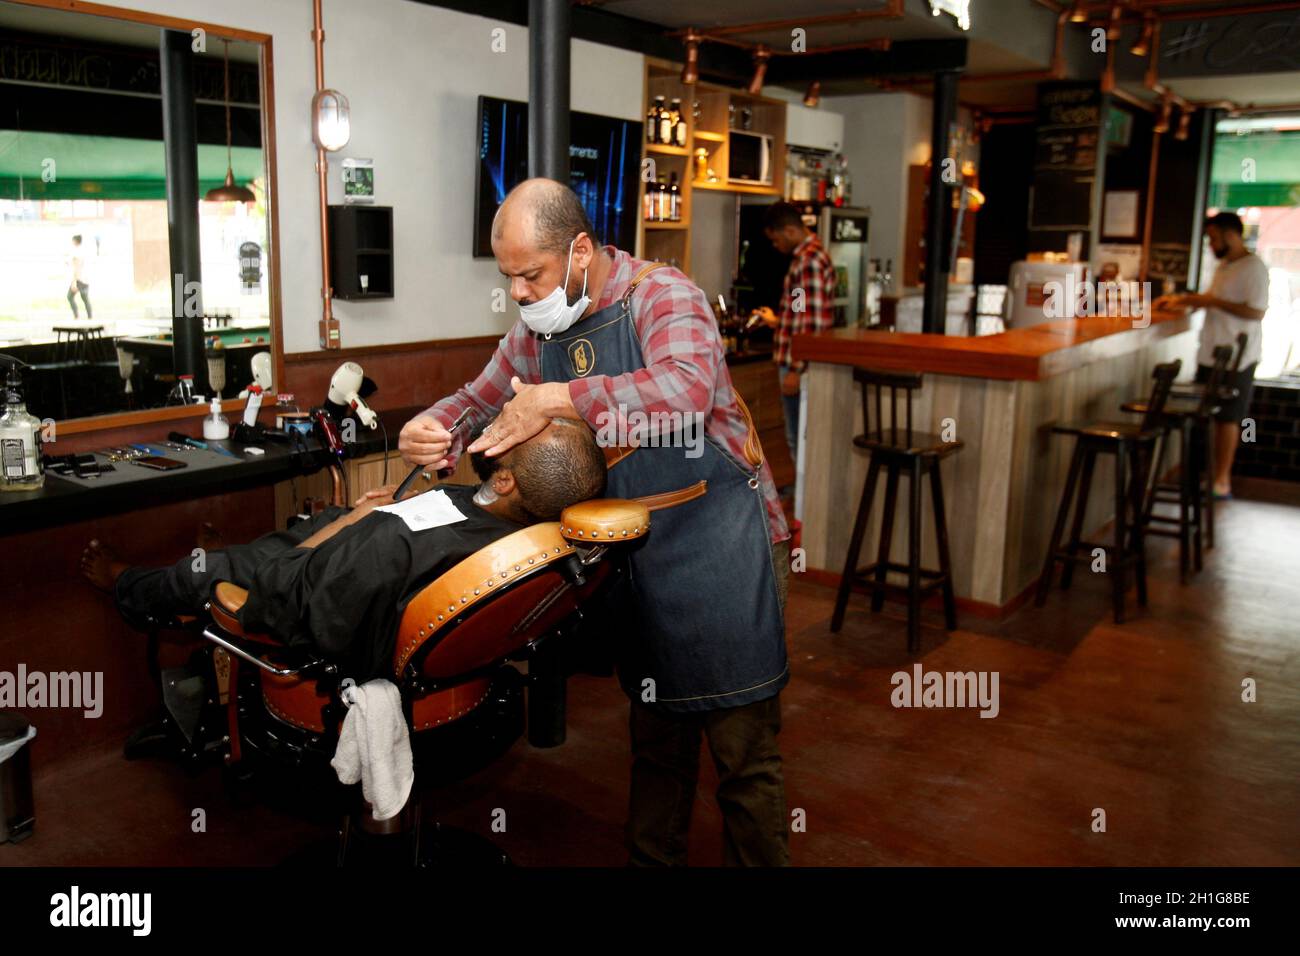 Model # 7 Brazilian Barber Shop - Brazilian Barber Shop